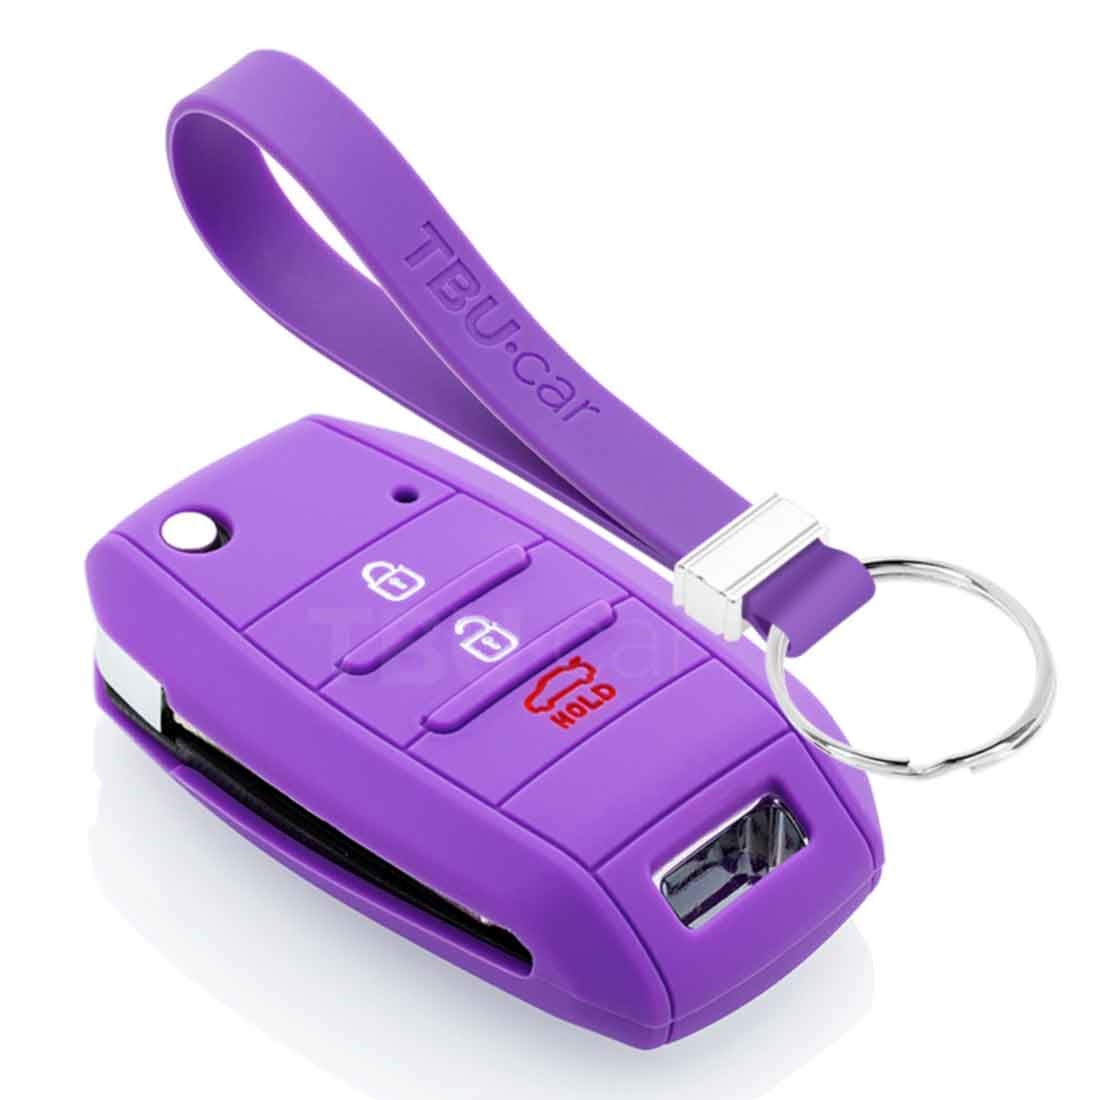 TBU car TBU car Autoschlüssel Hülle kompatibel mit Kia 3 Tasten - Schutzhülle aus Silikon - Auto Schlüsselhülle Cover in Violett